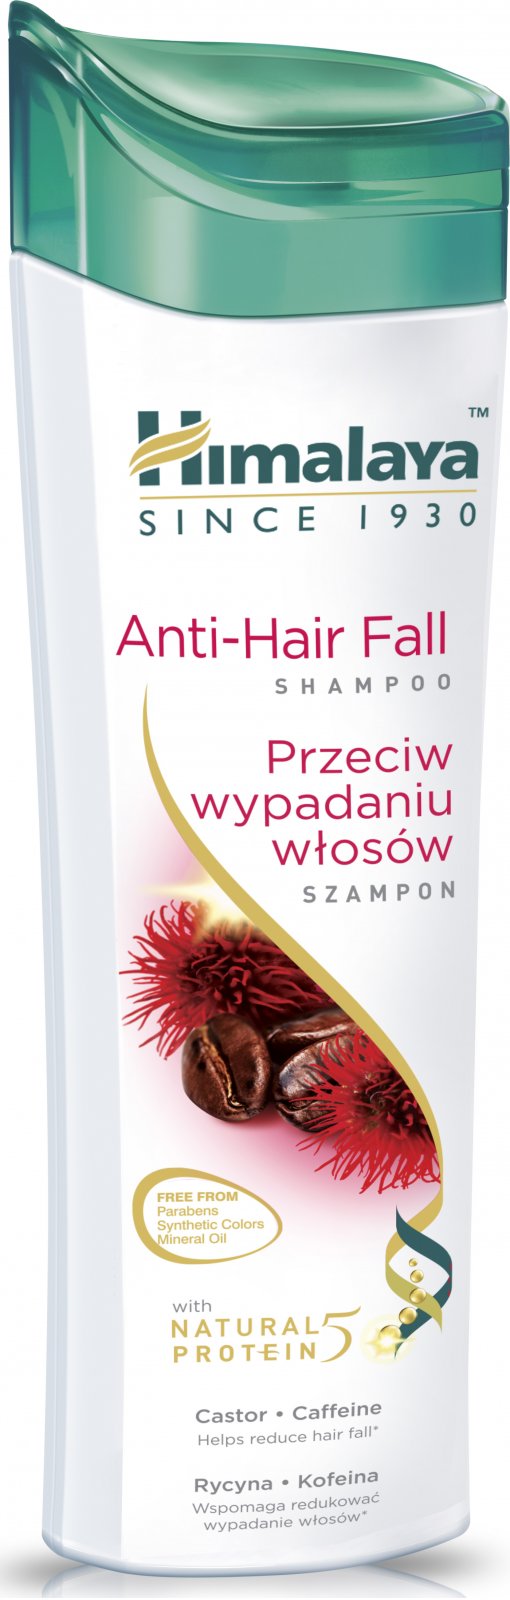 szampon himalaya anti hair fall